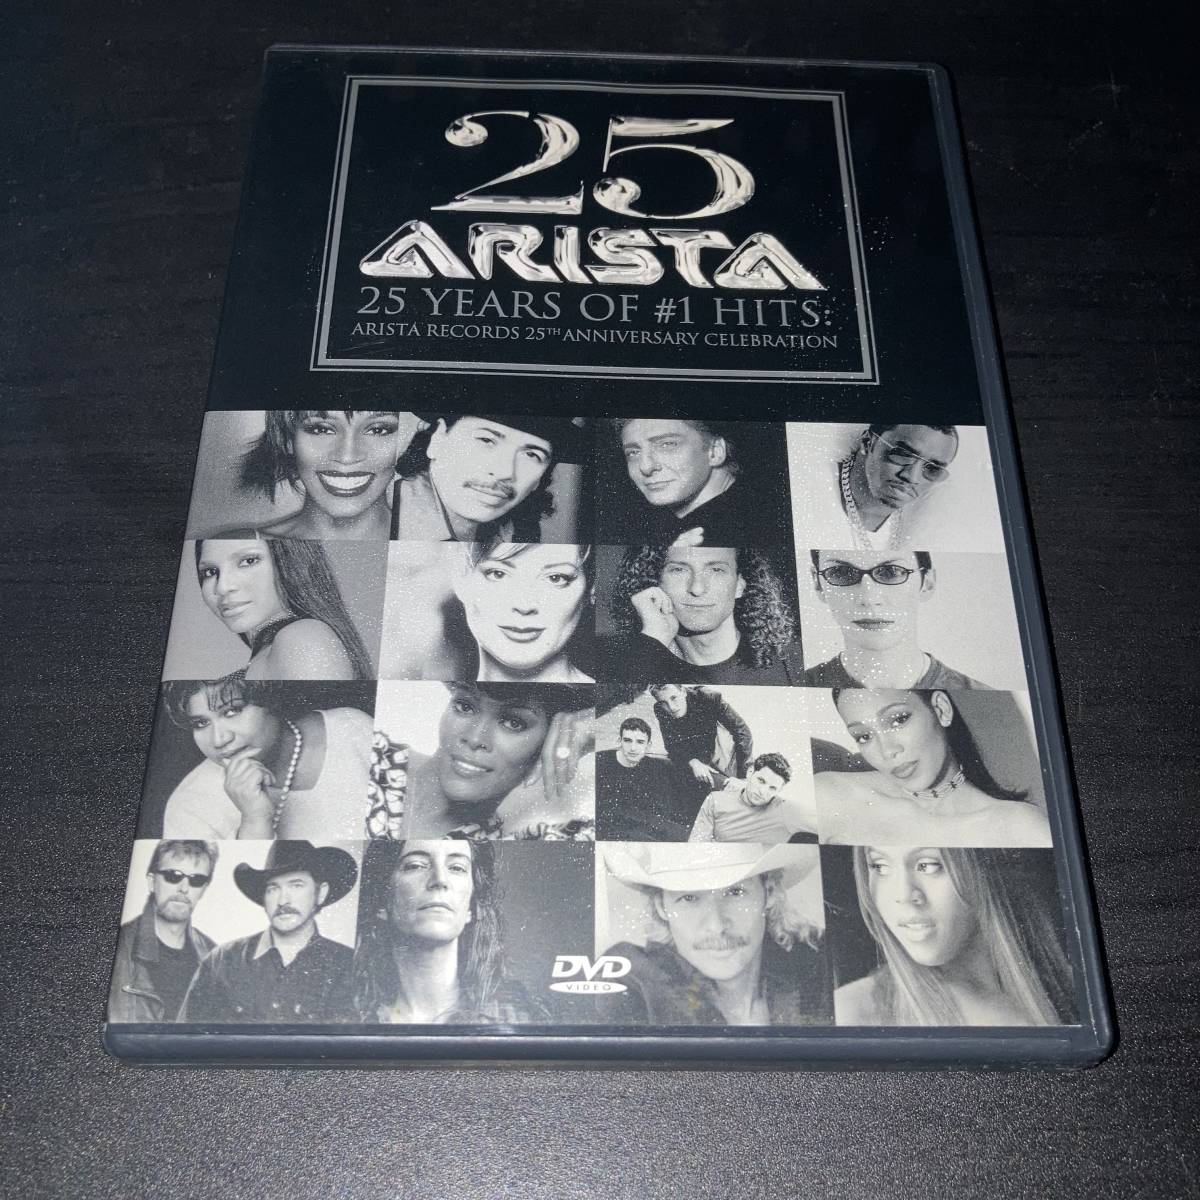 ARISTA 25 YEARS OF #1 HITS ★ DVD ★ SANTANA WHITNEY HOUSTON ARETHA FRANKLIN SARAH McLACHIAN KENNY G ANNIE LENNOXの画像1